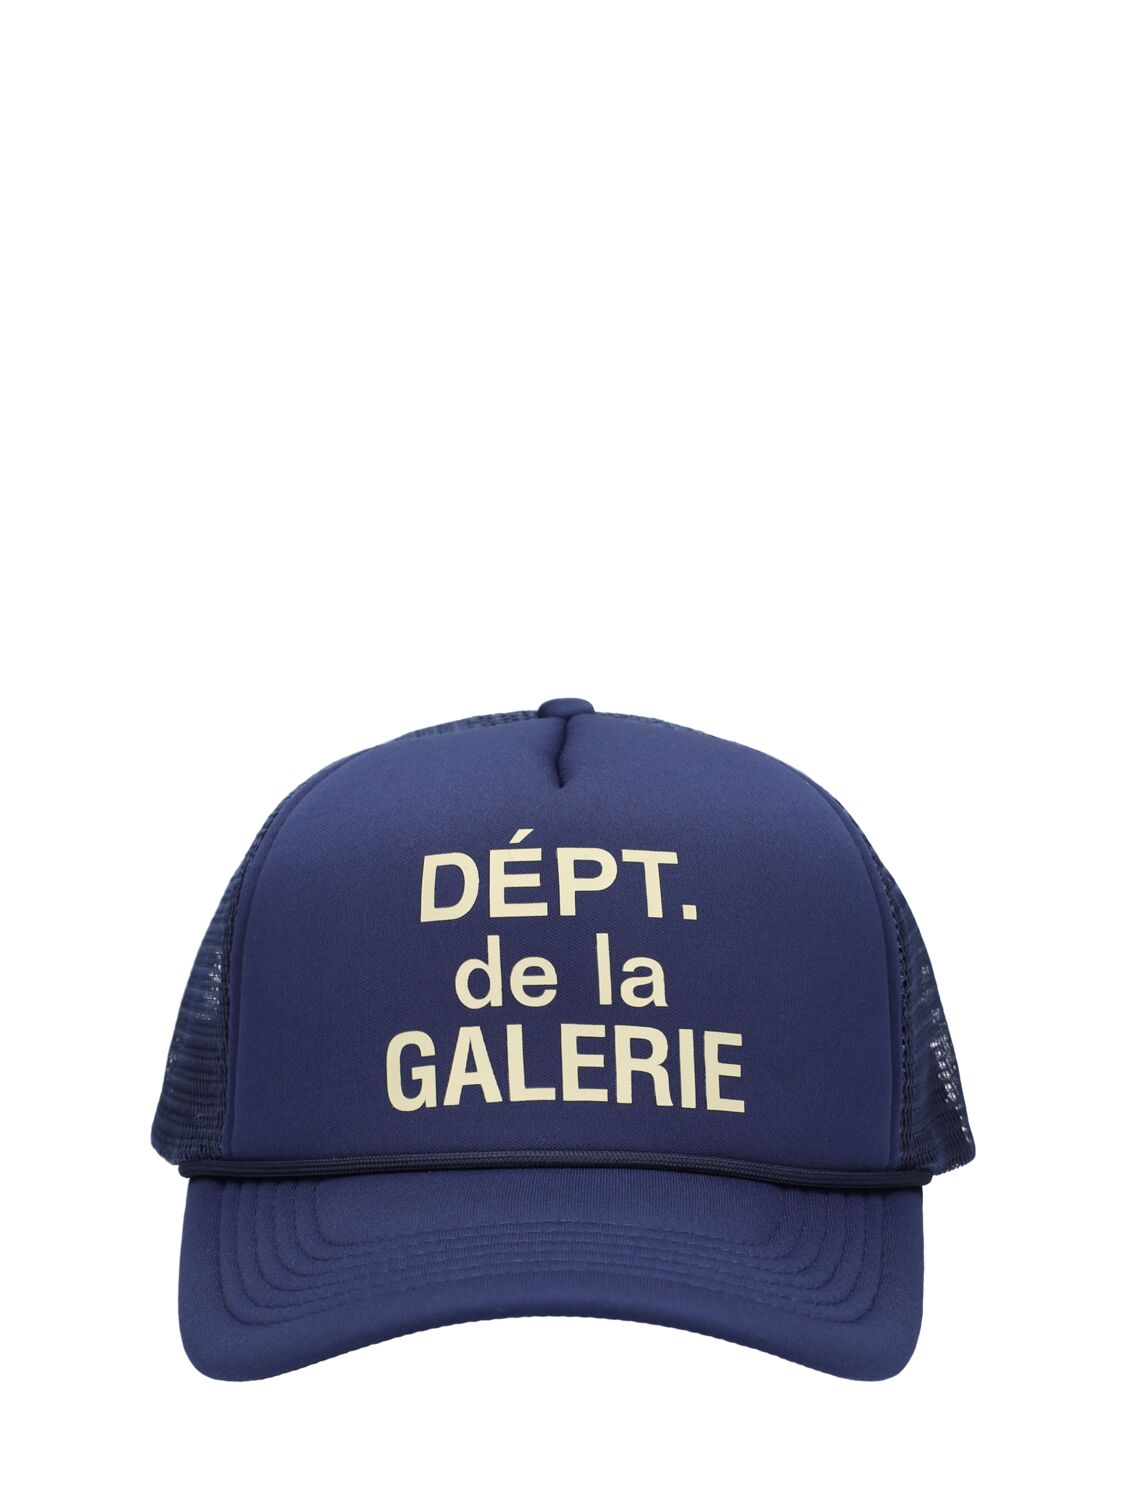 Gallery Dept. French Logo Trucker Hat In Blue